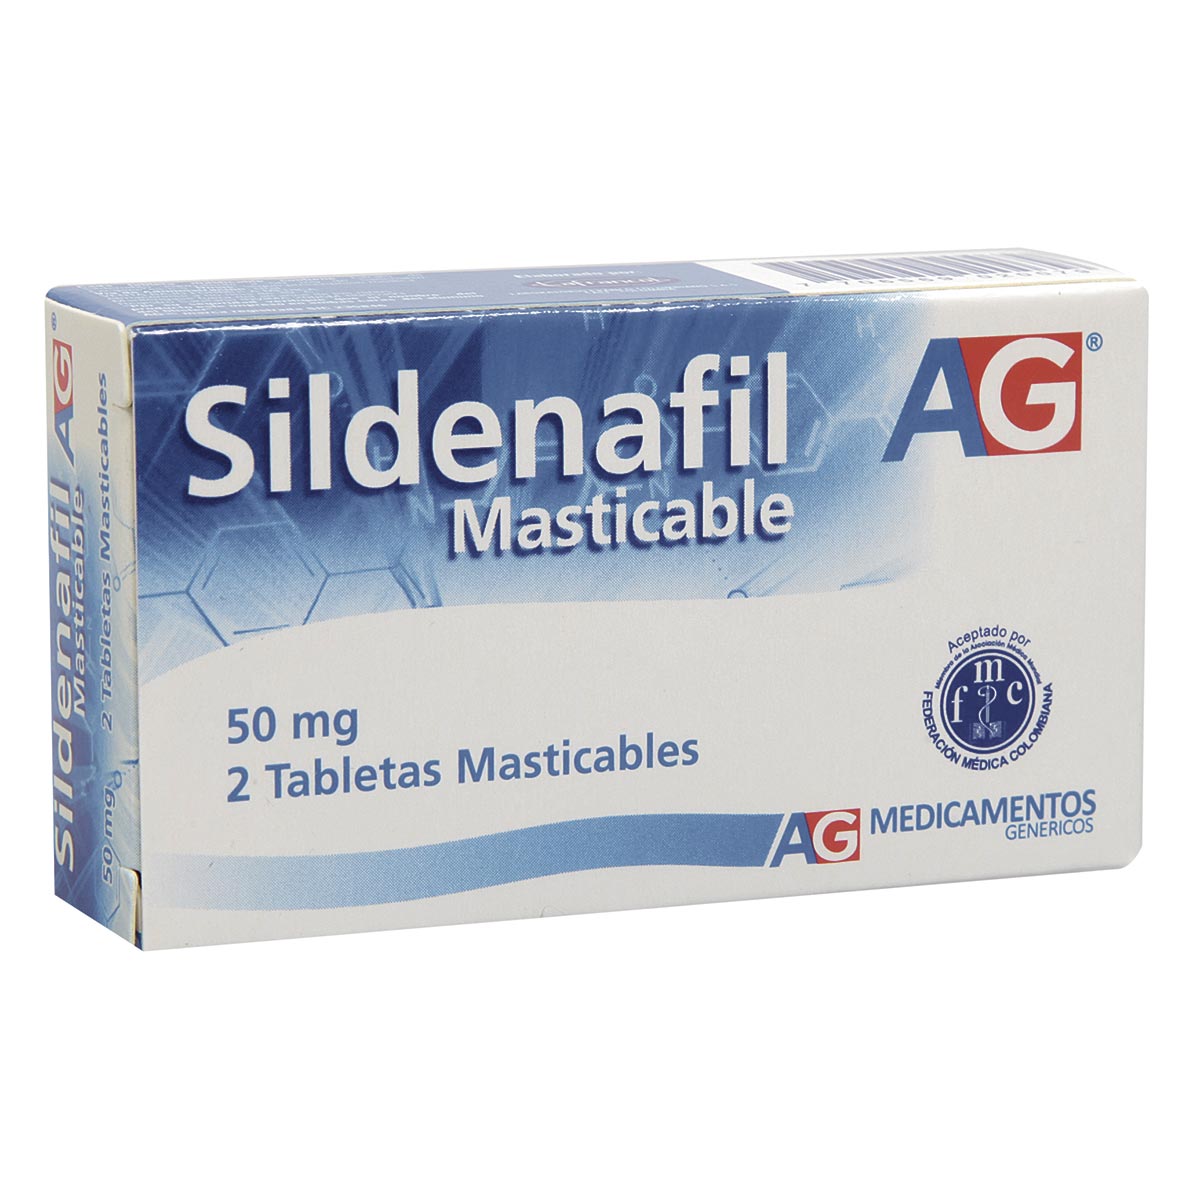 Sildenafil 50 Mg Tableta Masticables La Francol Theme Farmacias Theme Farmacias 3611